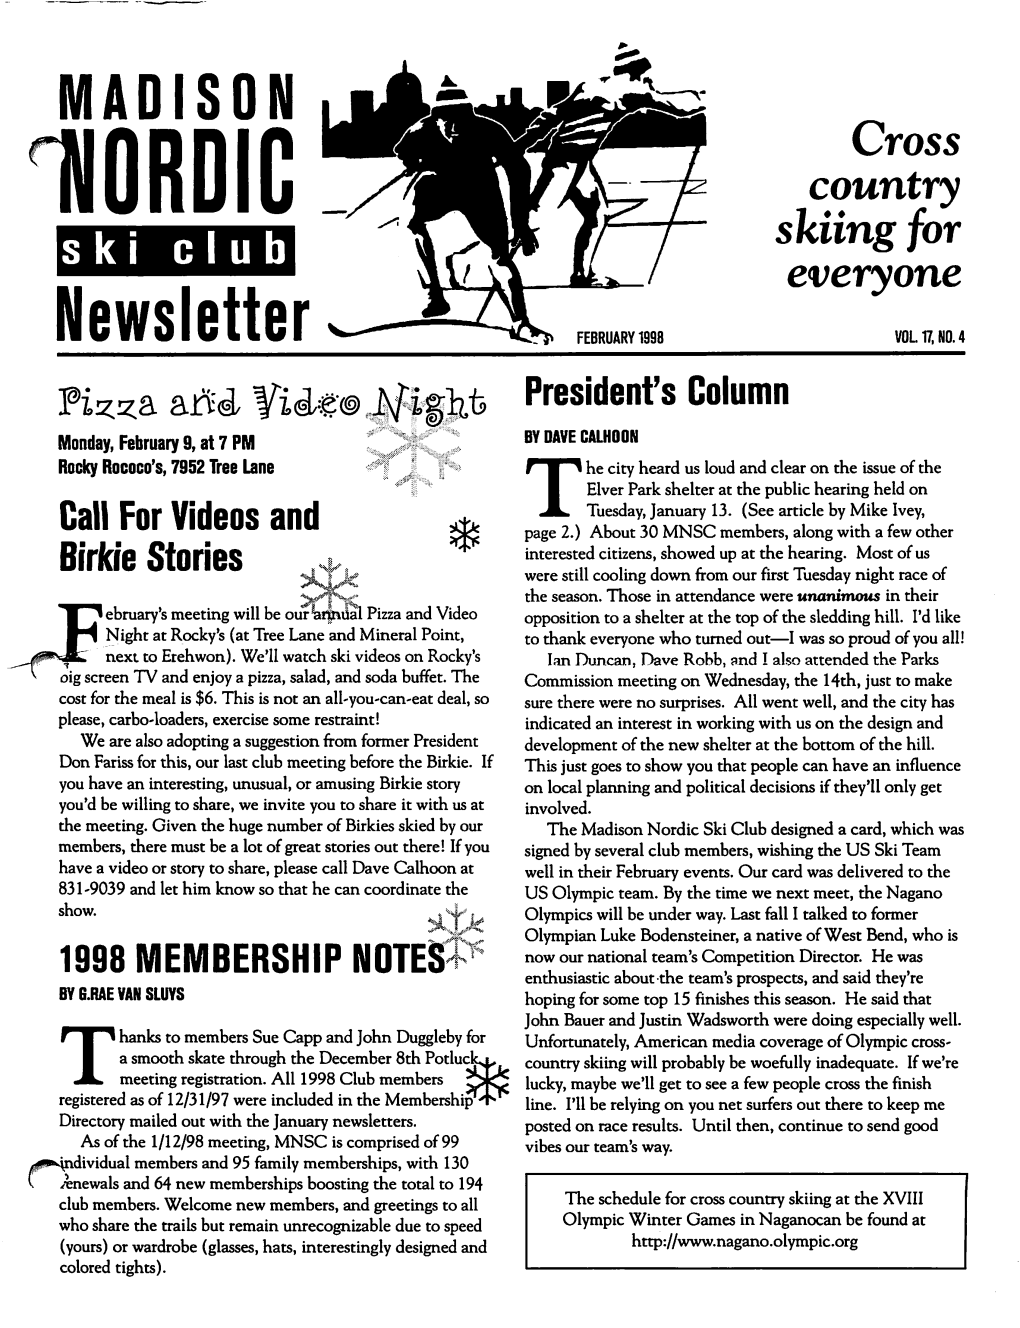 Madnorskinews, February 1998